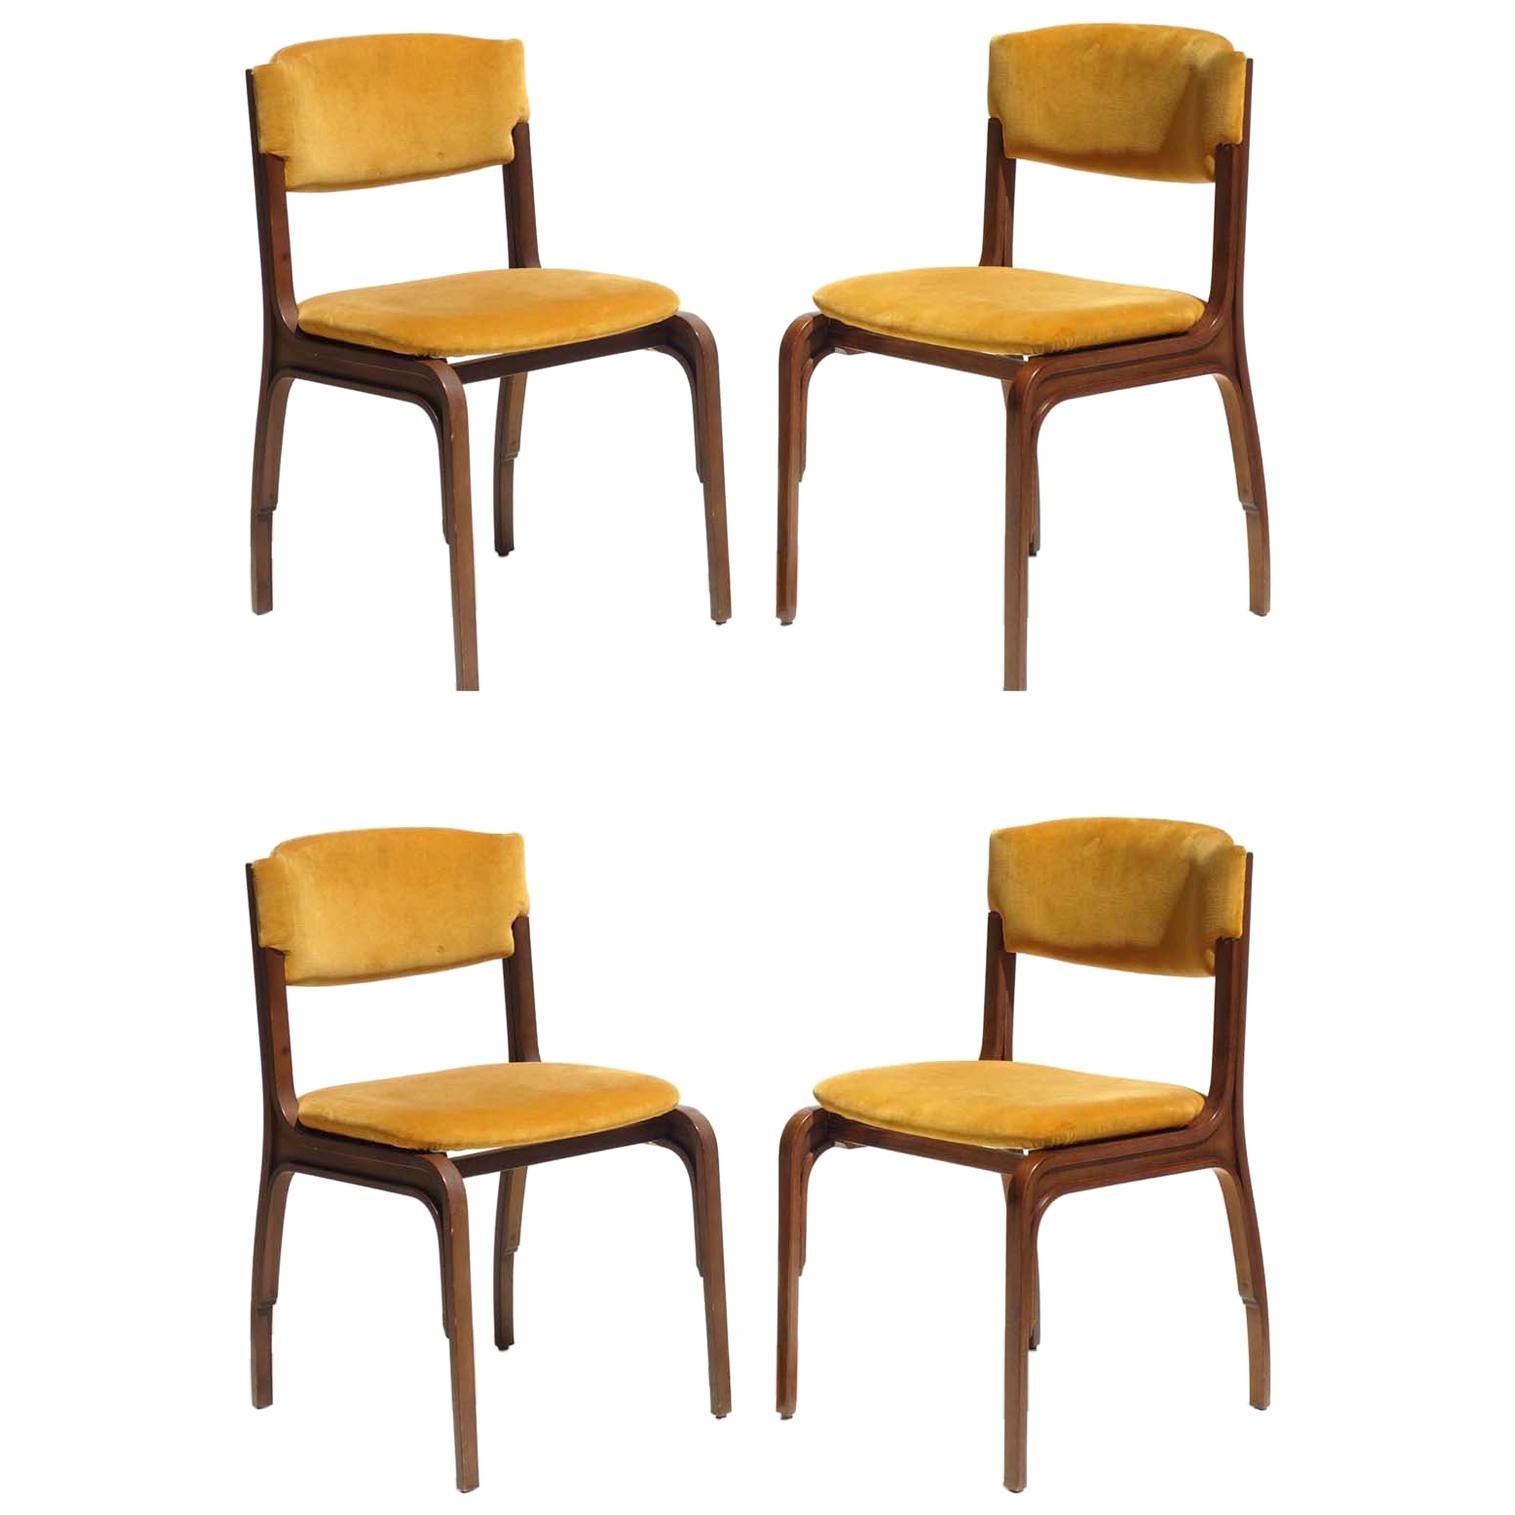 1960 Gianfranco Frattini for Cantieri Carugati Italian Design Chairs, Set of 4